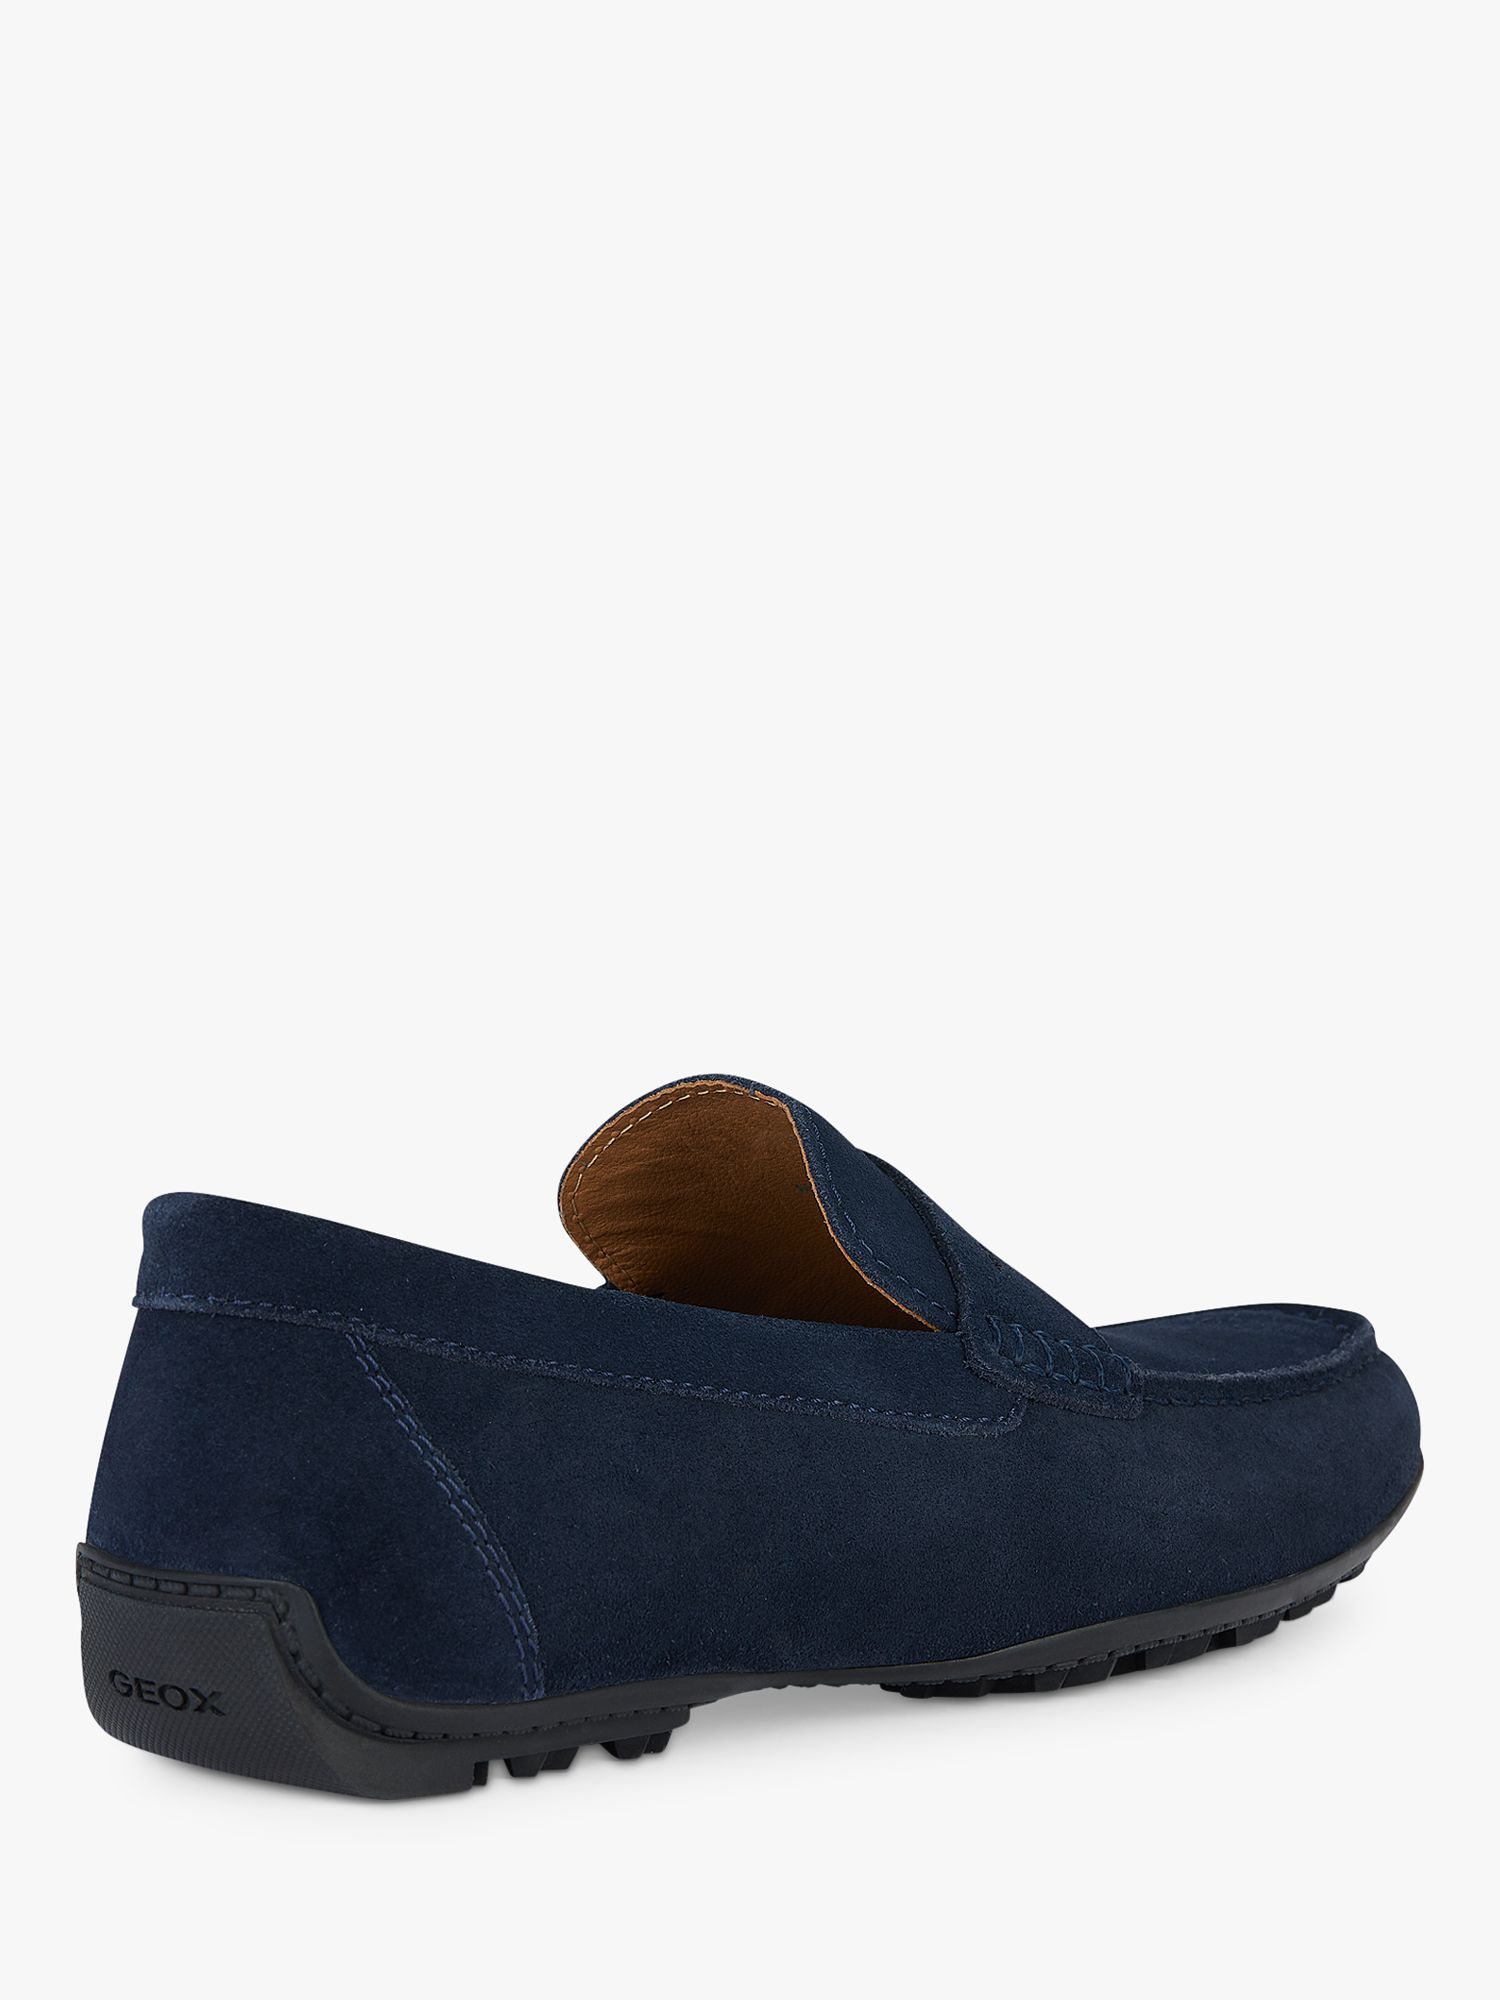 Geox Kosmopolis + Grip Leather Loafers, Navy, EU39